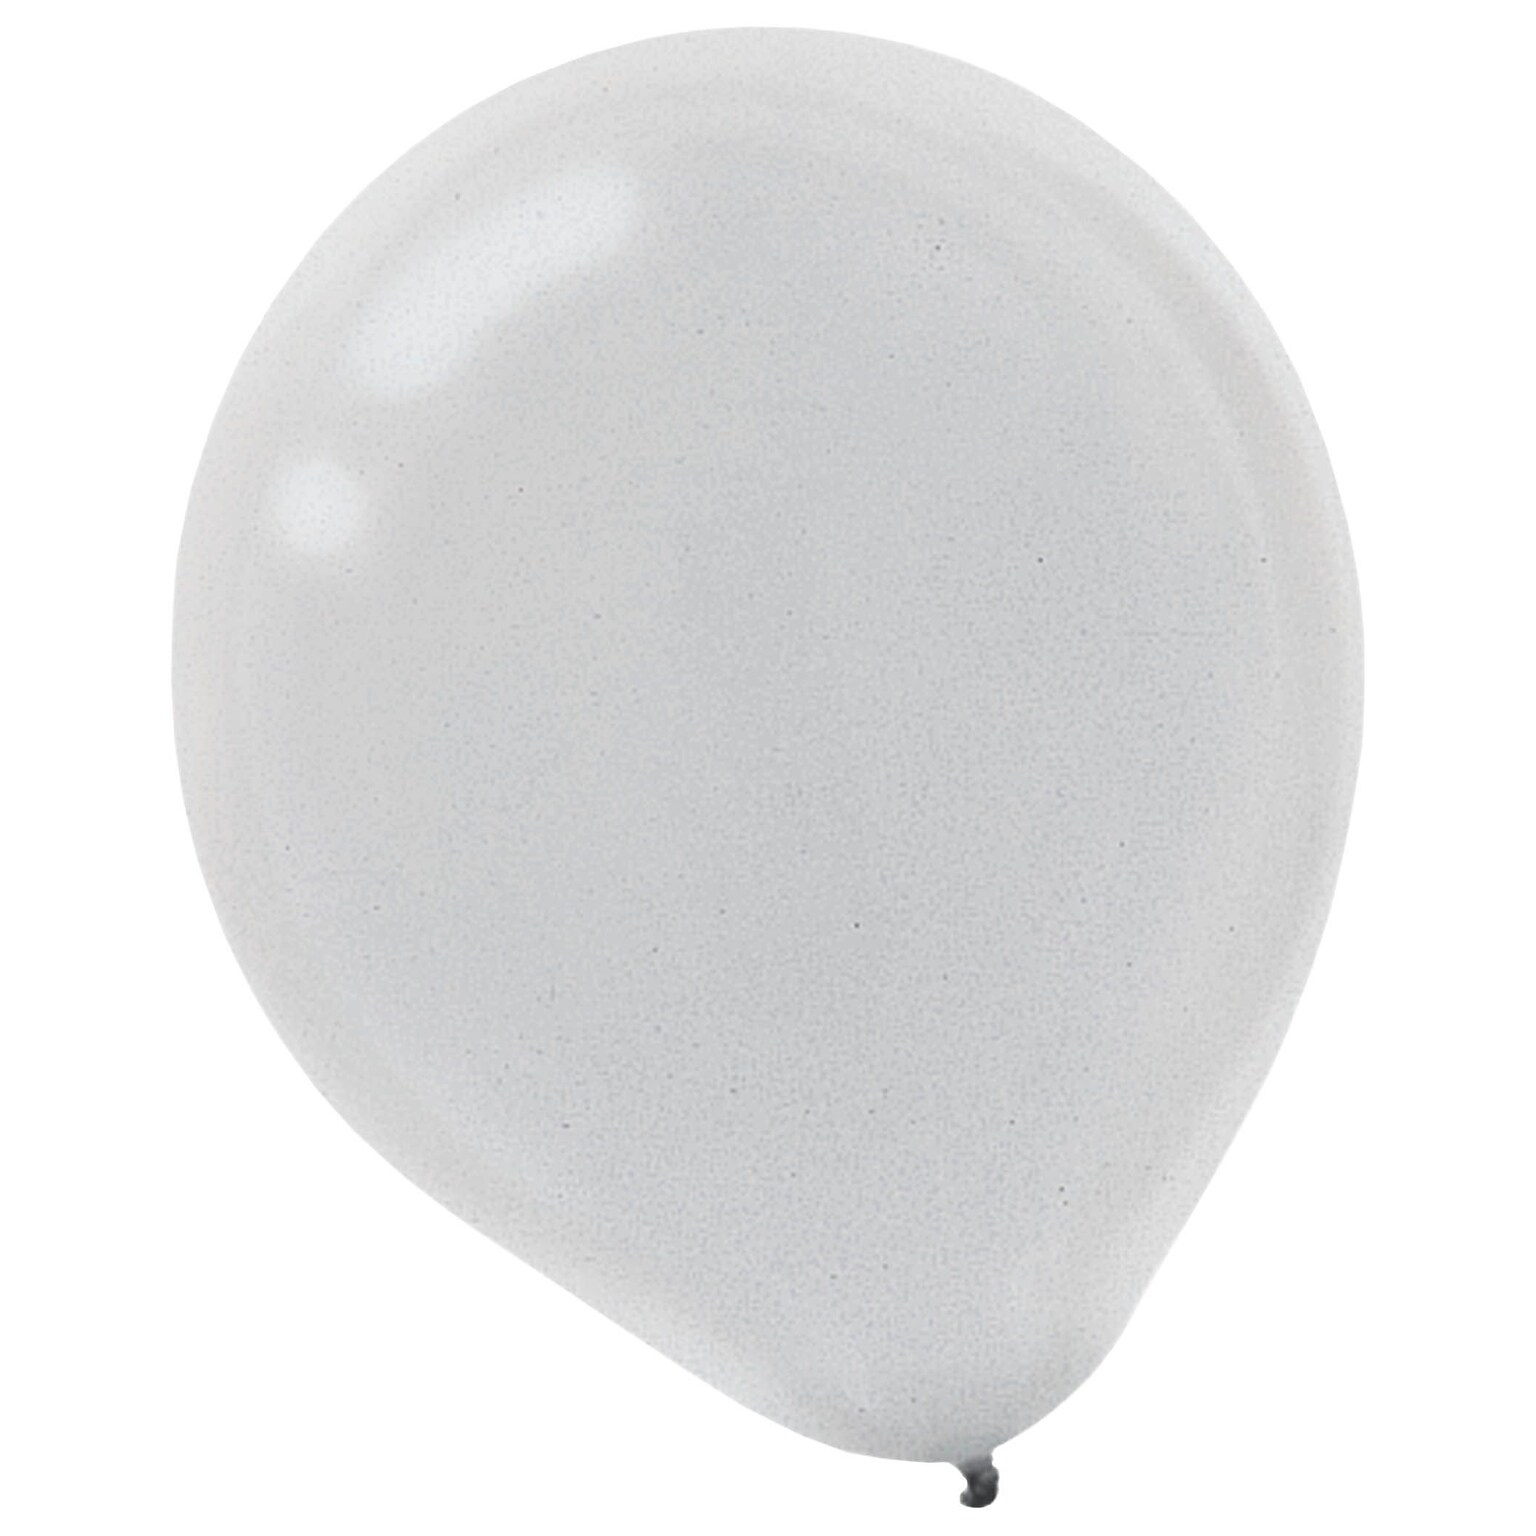 Amscan Pearl Latex Balloons, 18/Pack, Silver, 20 Per Pack (115255.18)